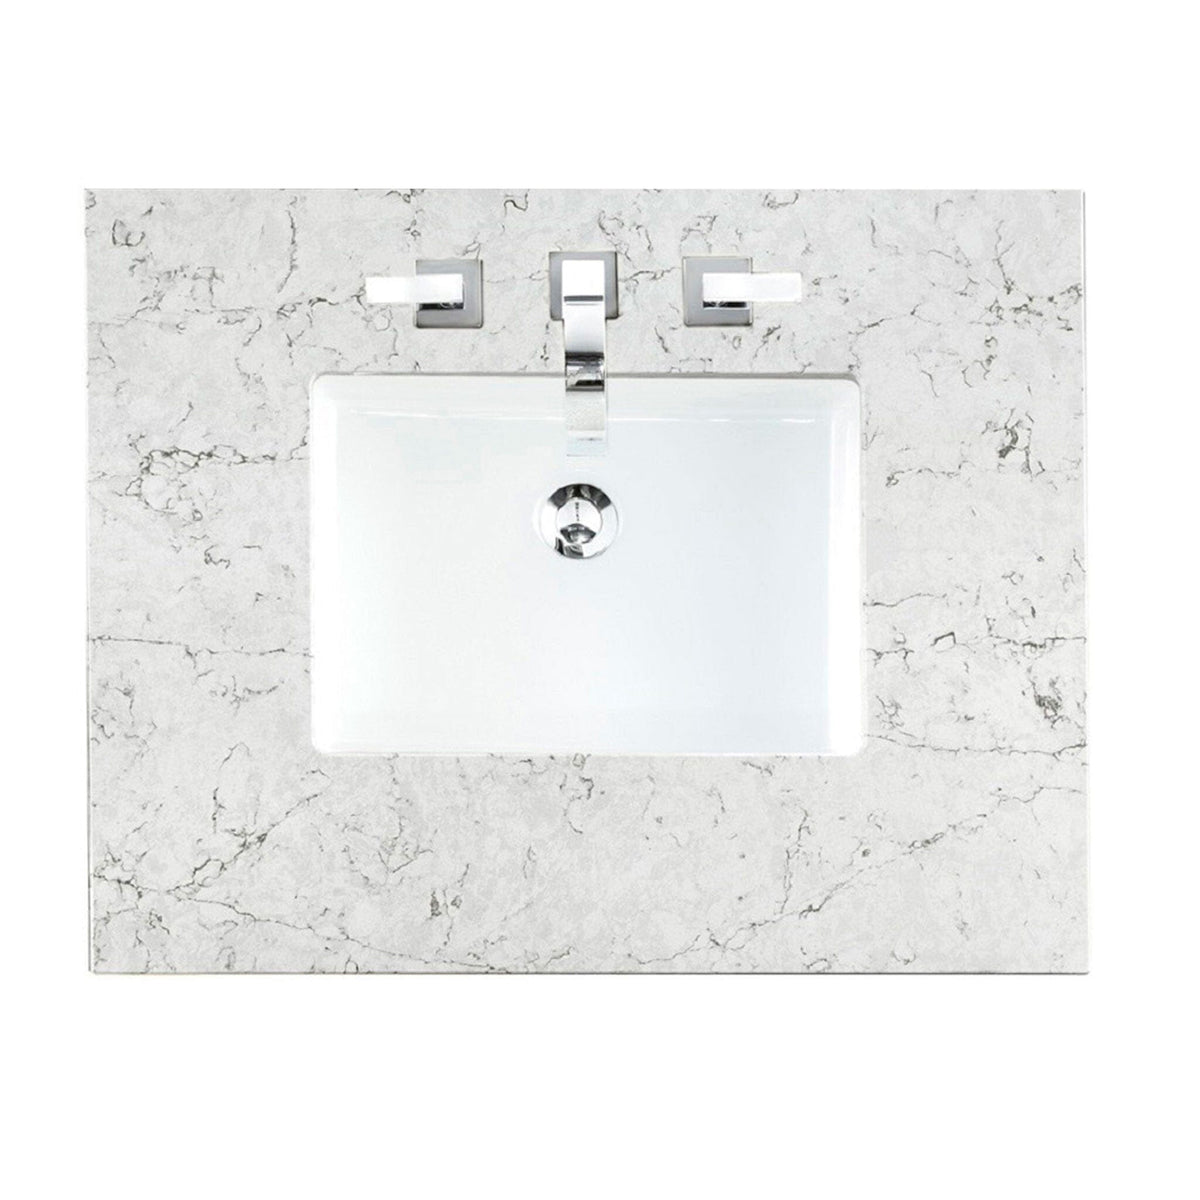 90" Addison Mid-Century Acacia Single Sink Bathroom Vanity Suite with 3 cm Eternal Jasmine Pearl Quartz Top